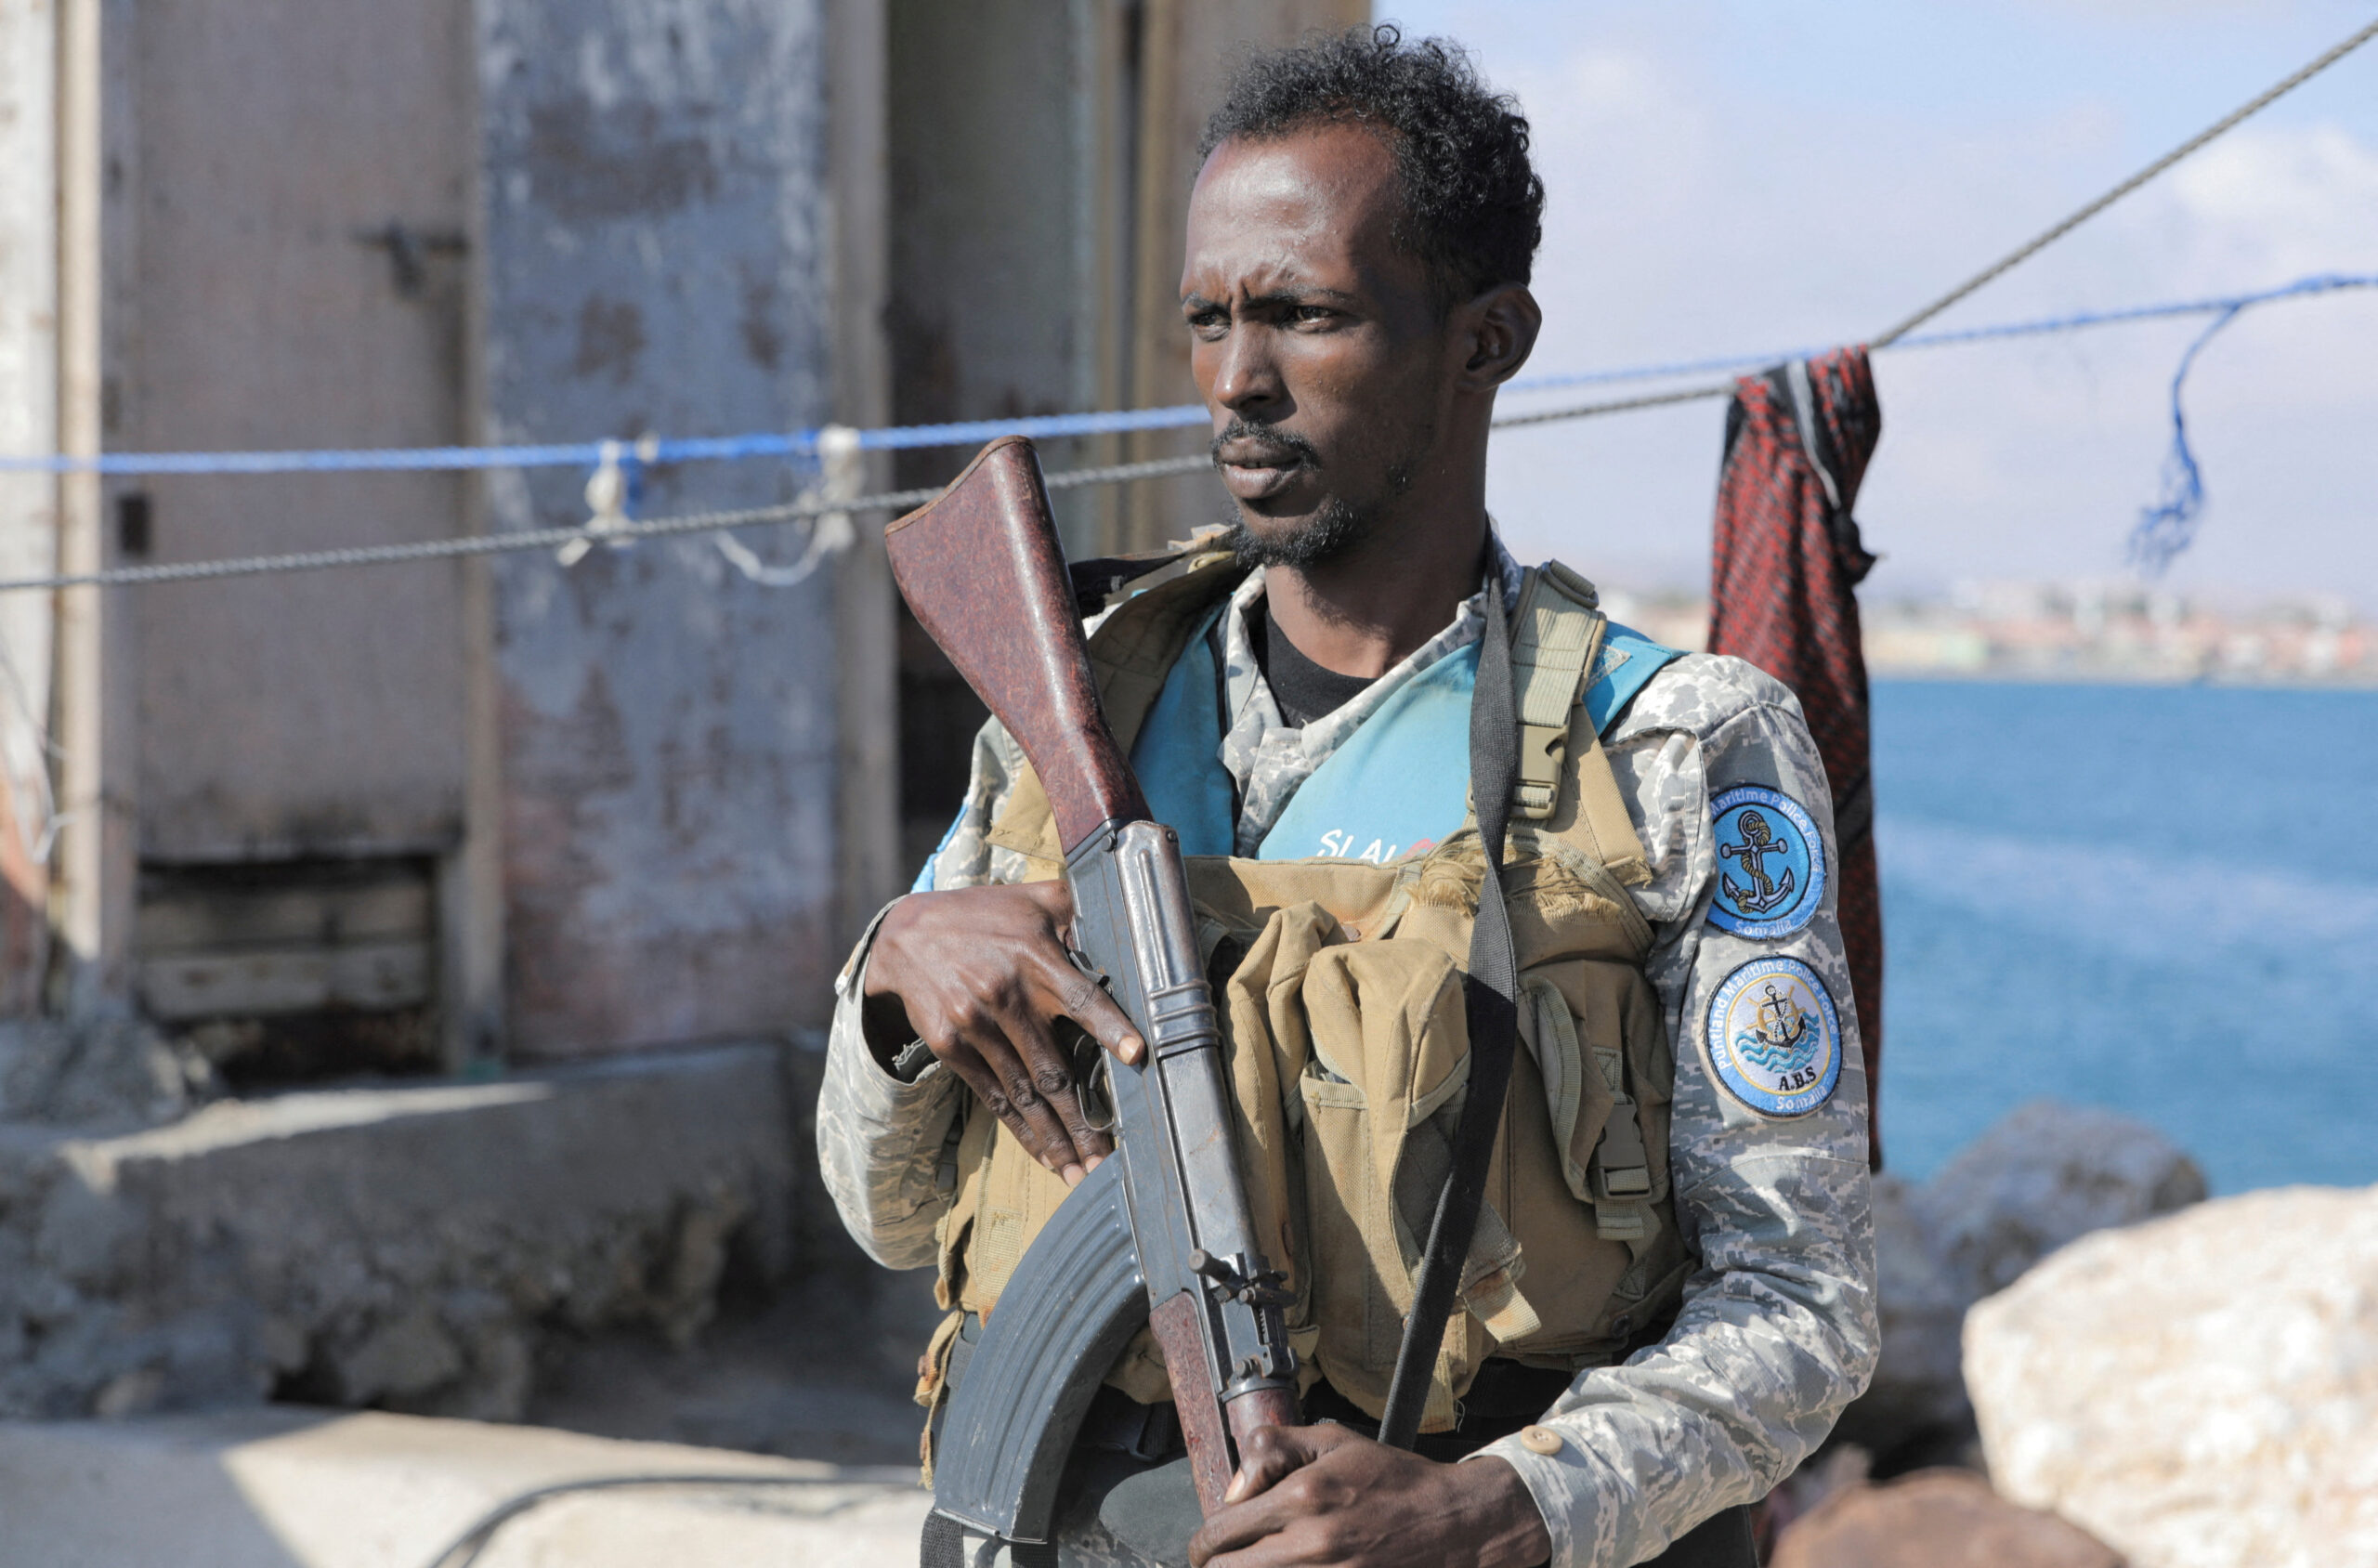 Somali pirates